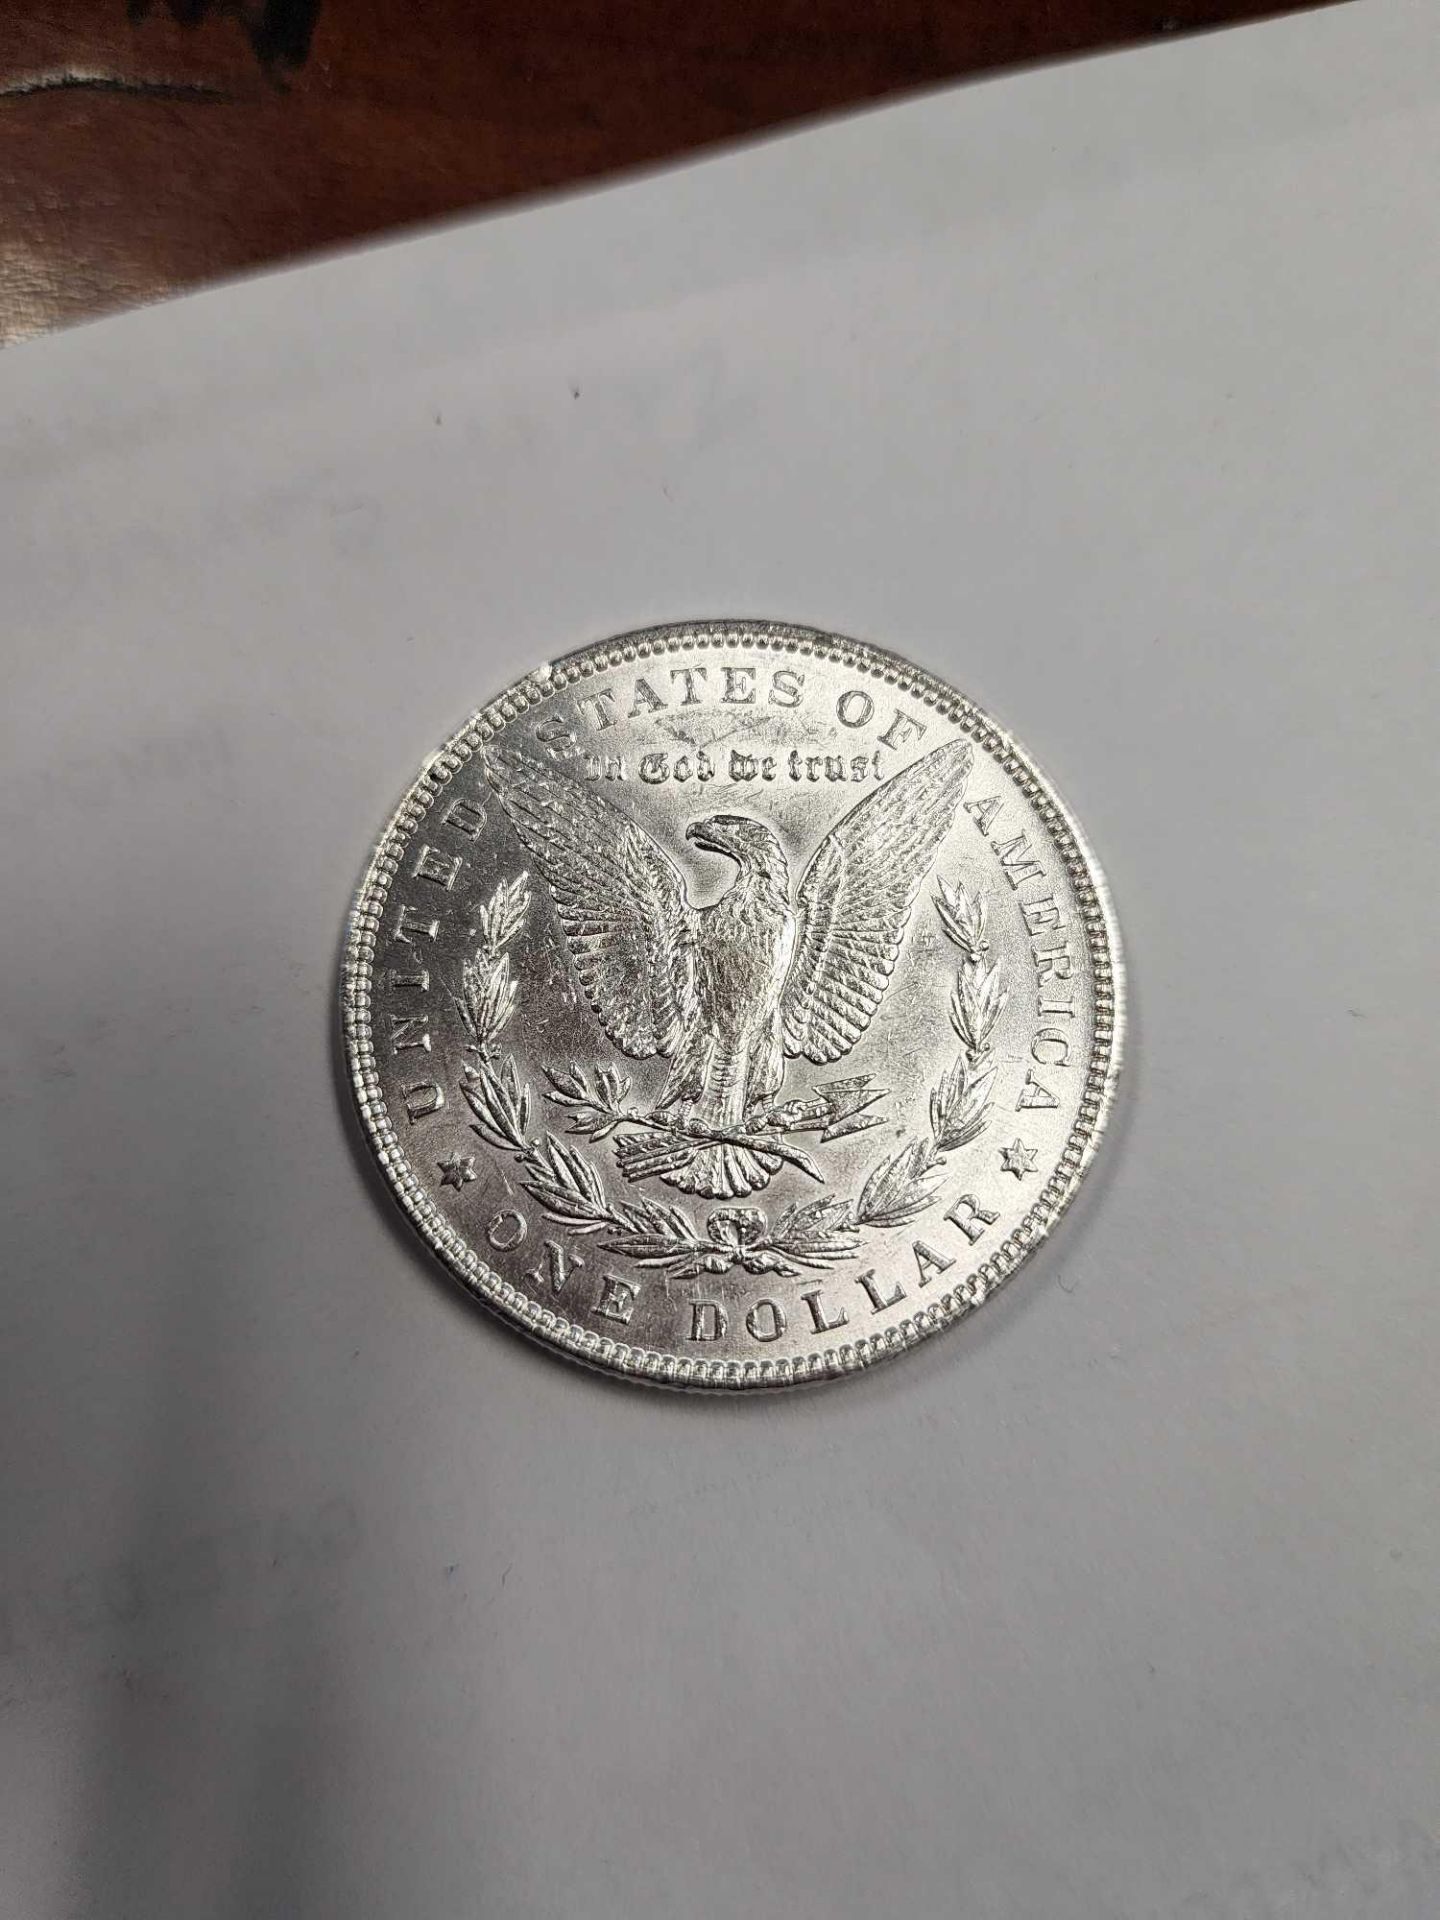 1883 Morgan Dollar (uncirculated) - Image 2 of 3